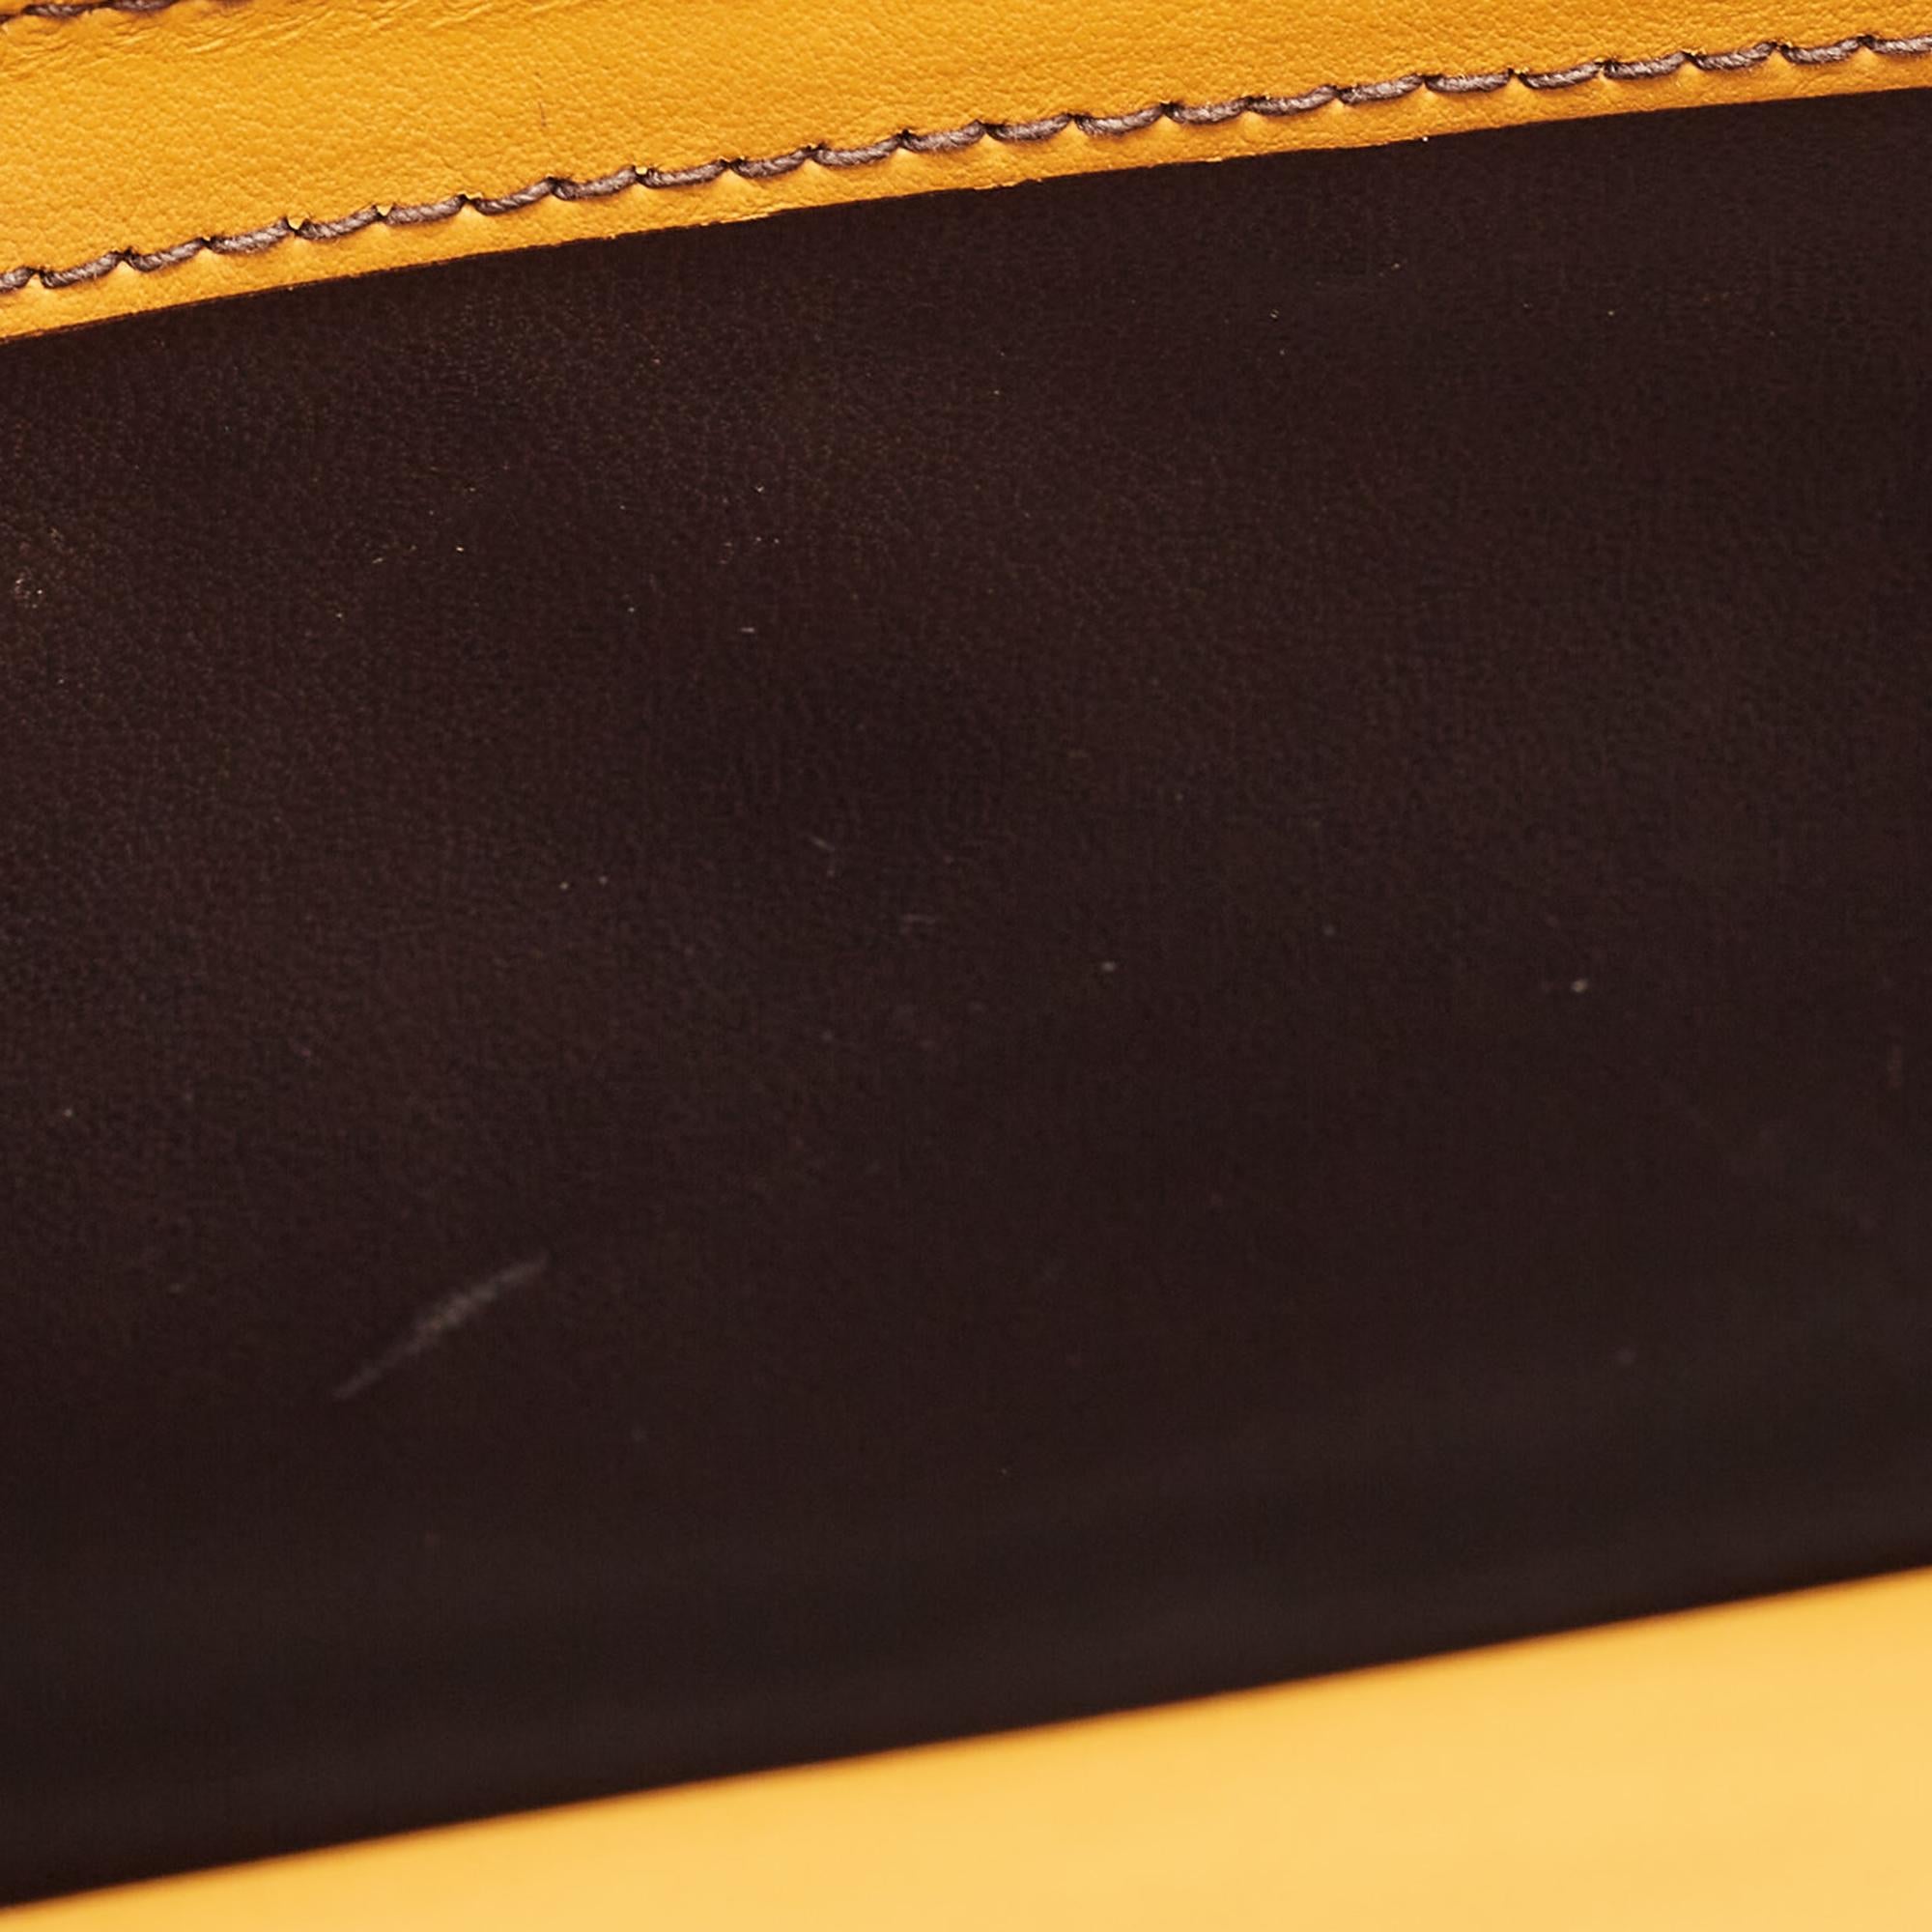 Prada Mustard Yellow/Choco Brown Leather Pionniere Saddle Bag 3